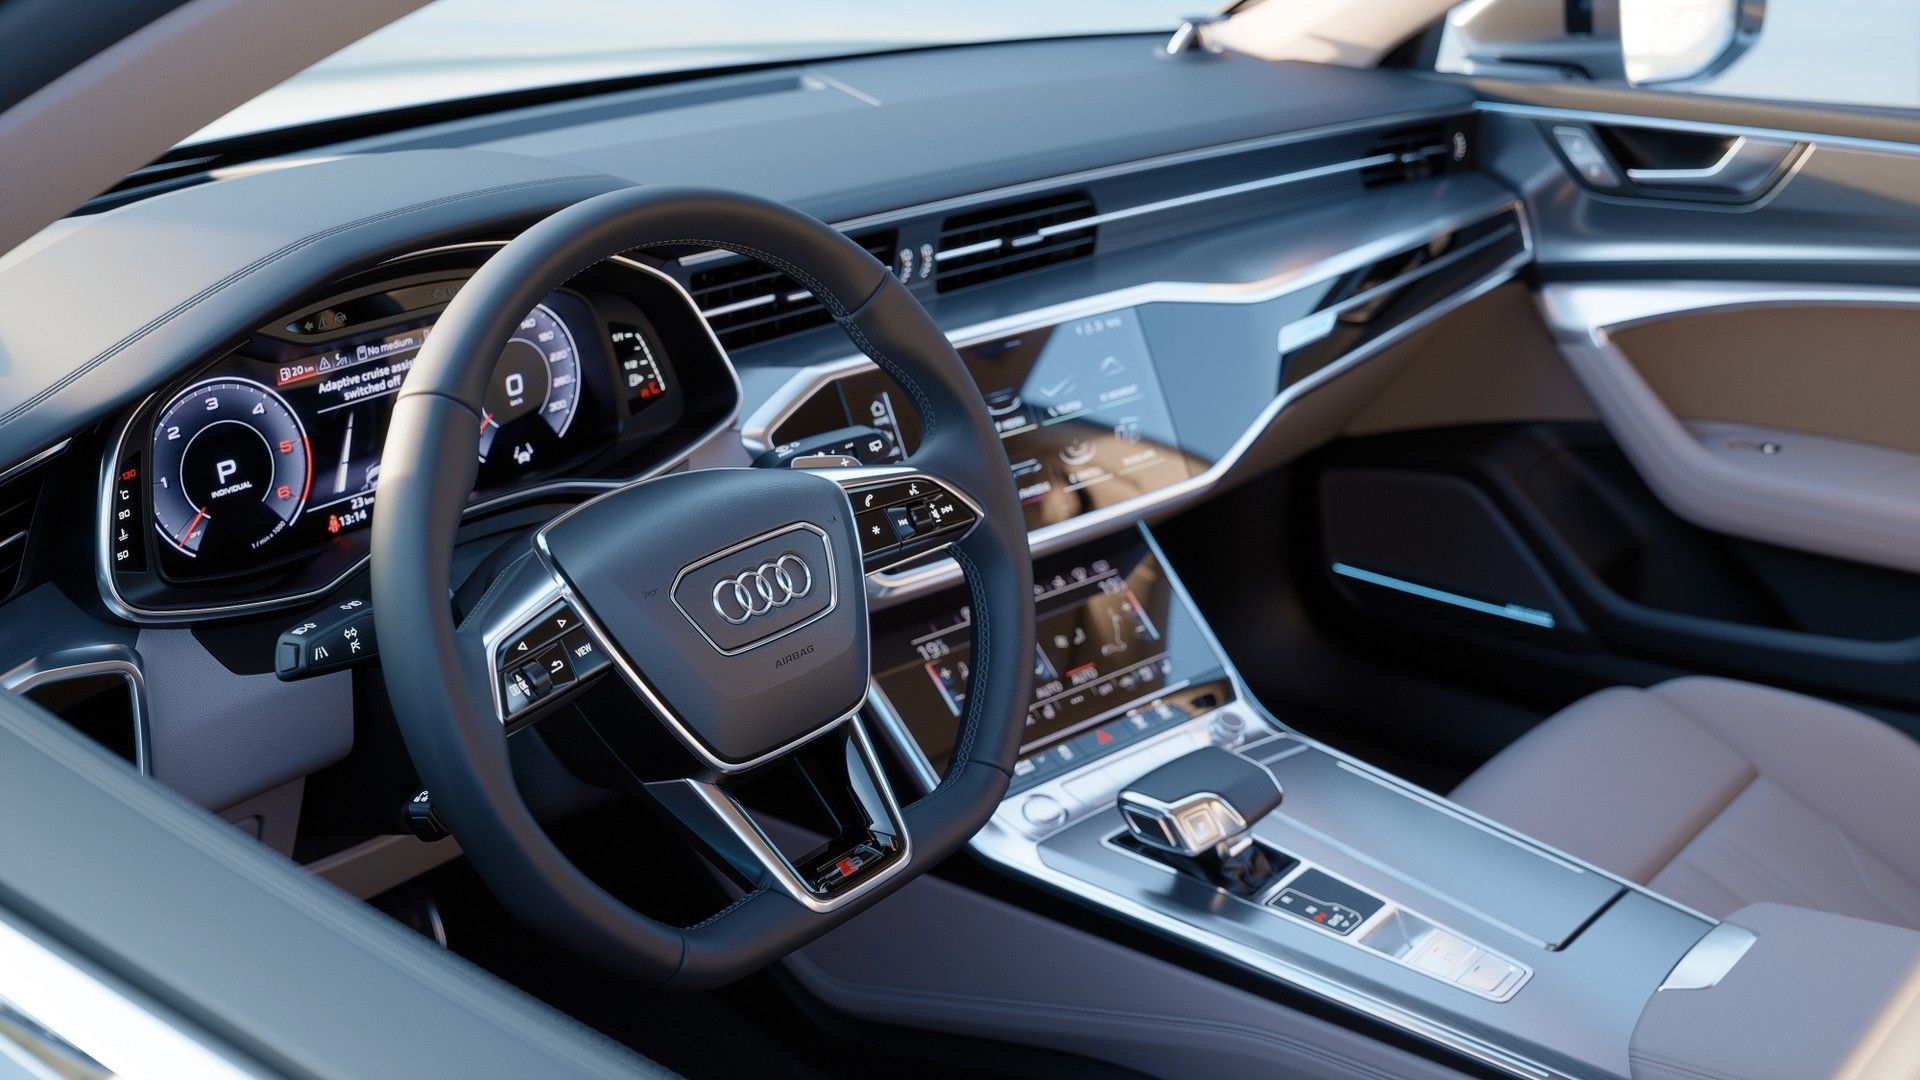 The interior design of the Audi A7 Sportback Car